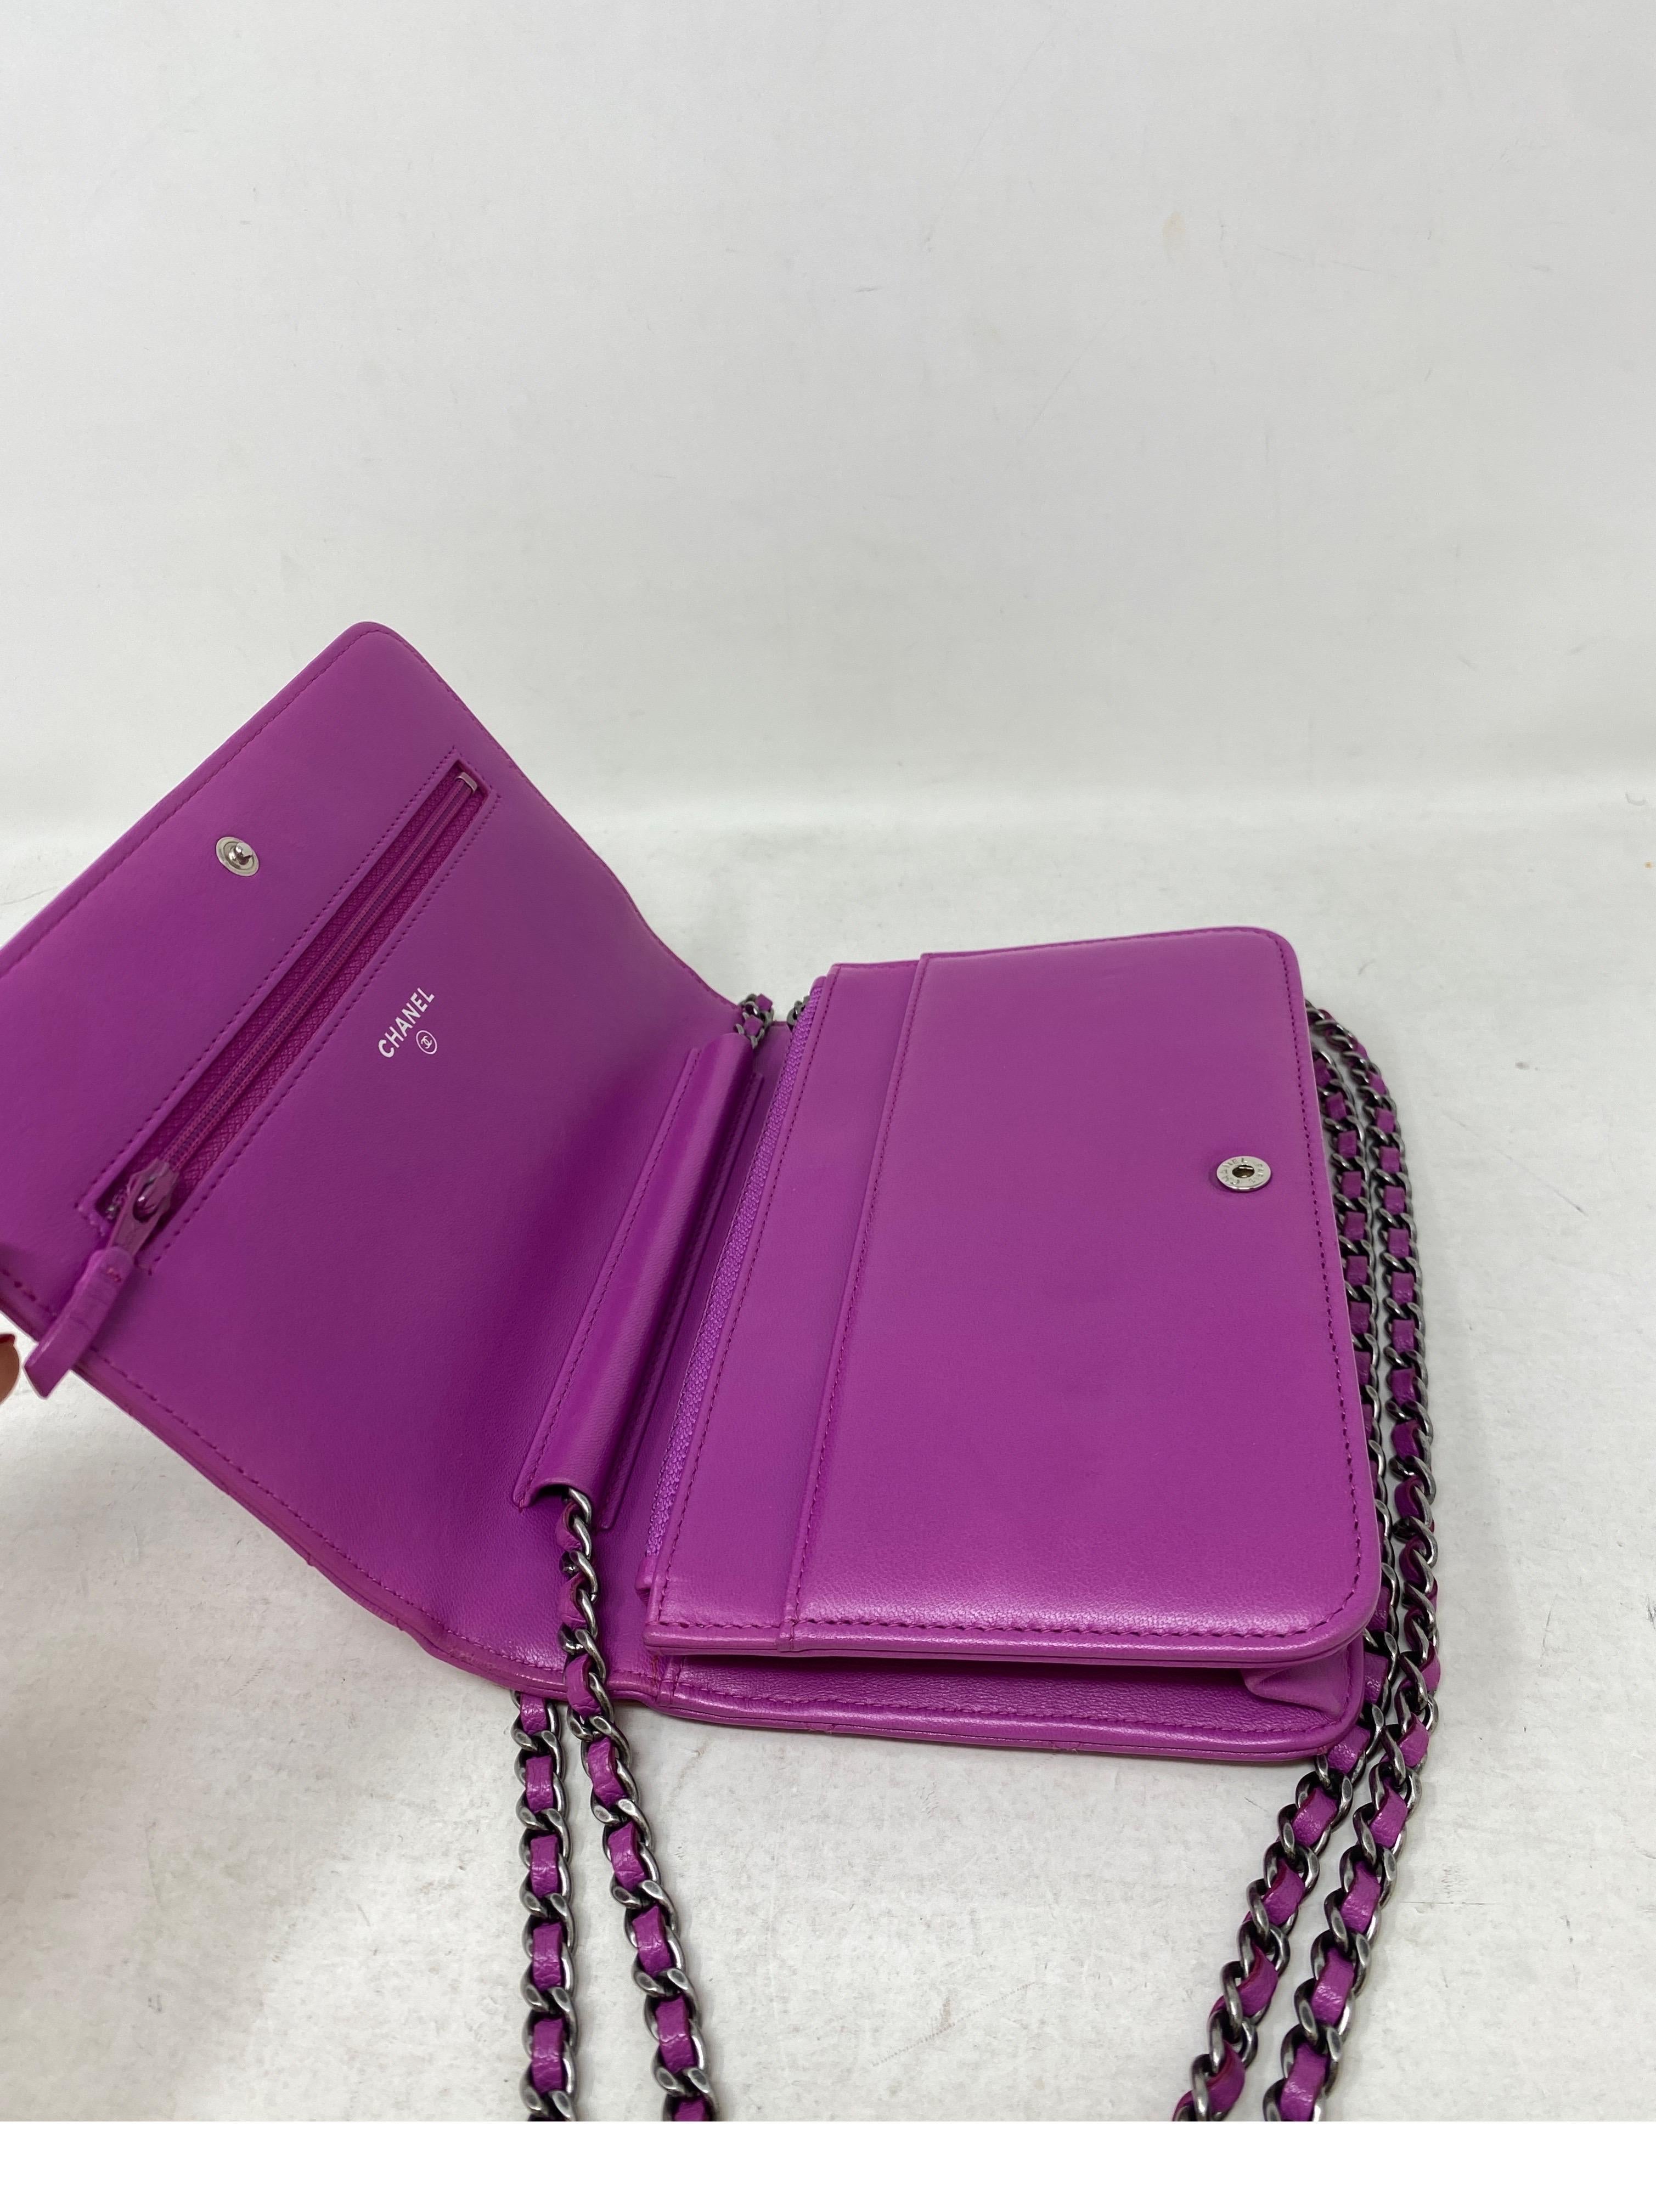 Chanel Fuschia Wallet On A Chain Bag  5